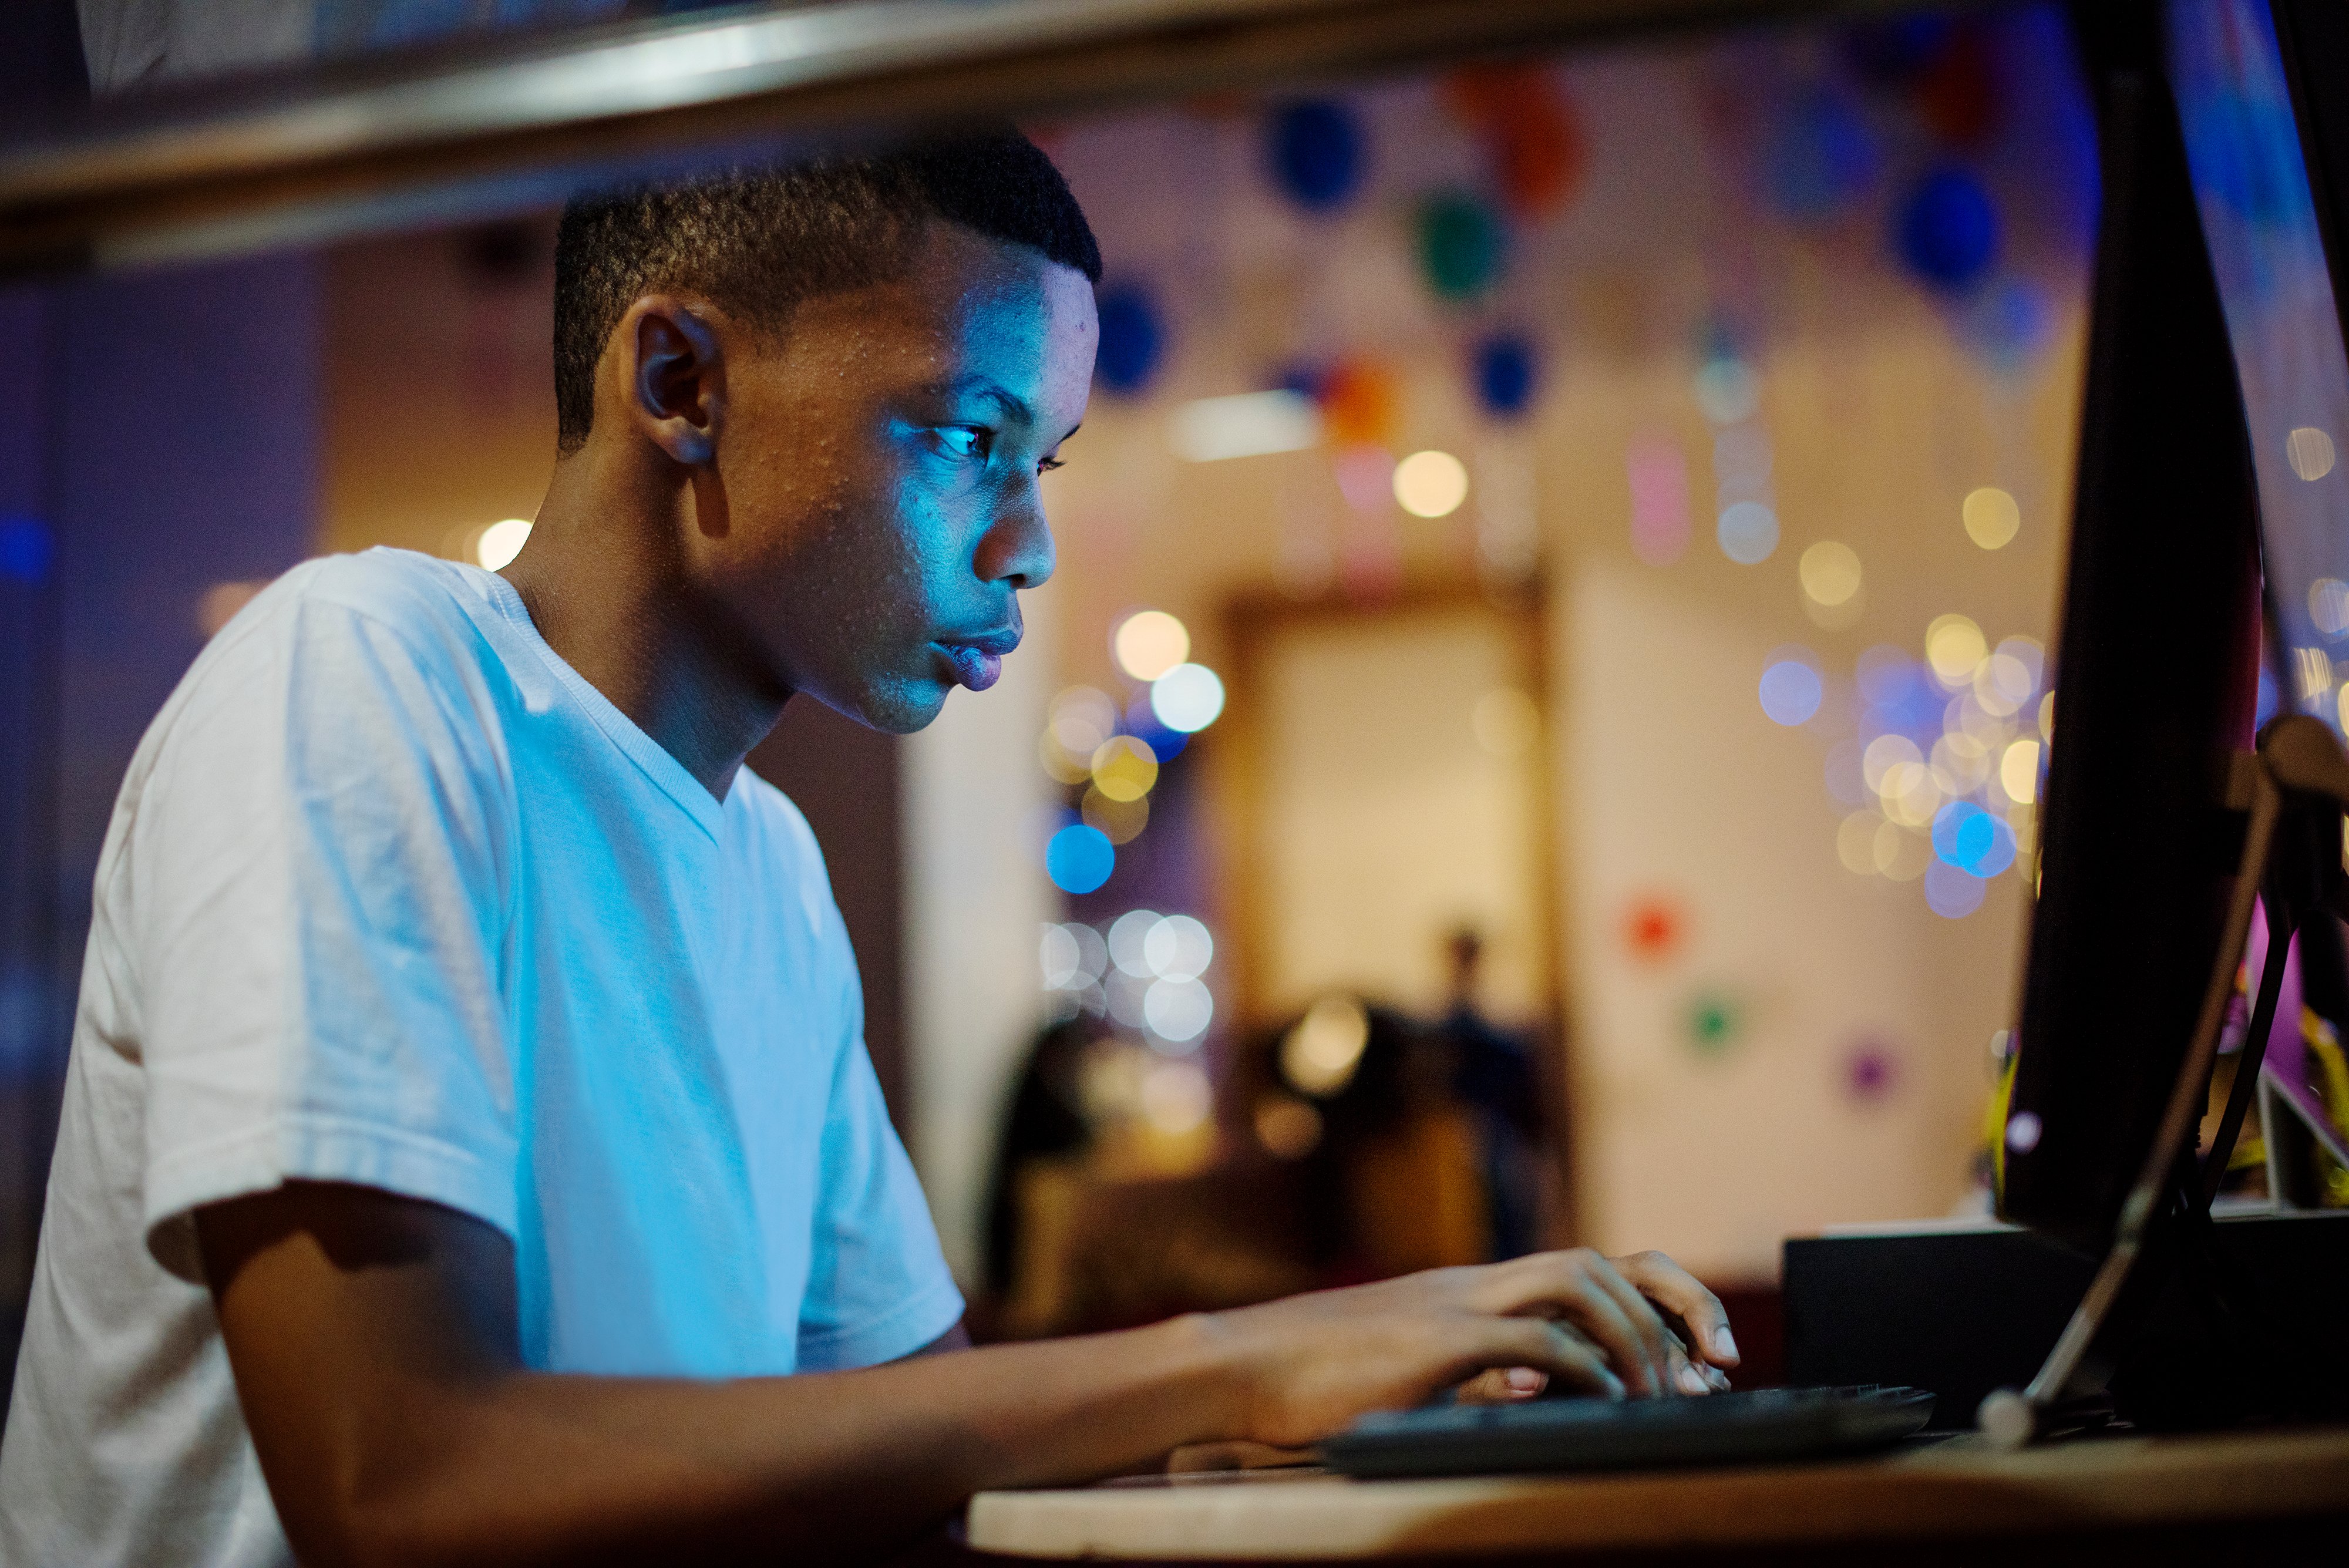 african-american-boy-using-a-computer-at-night-2022-09-16-09-21-59-utc